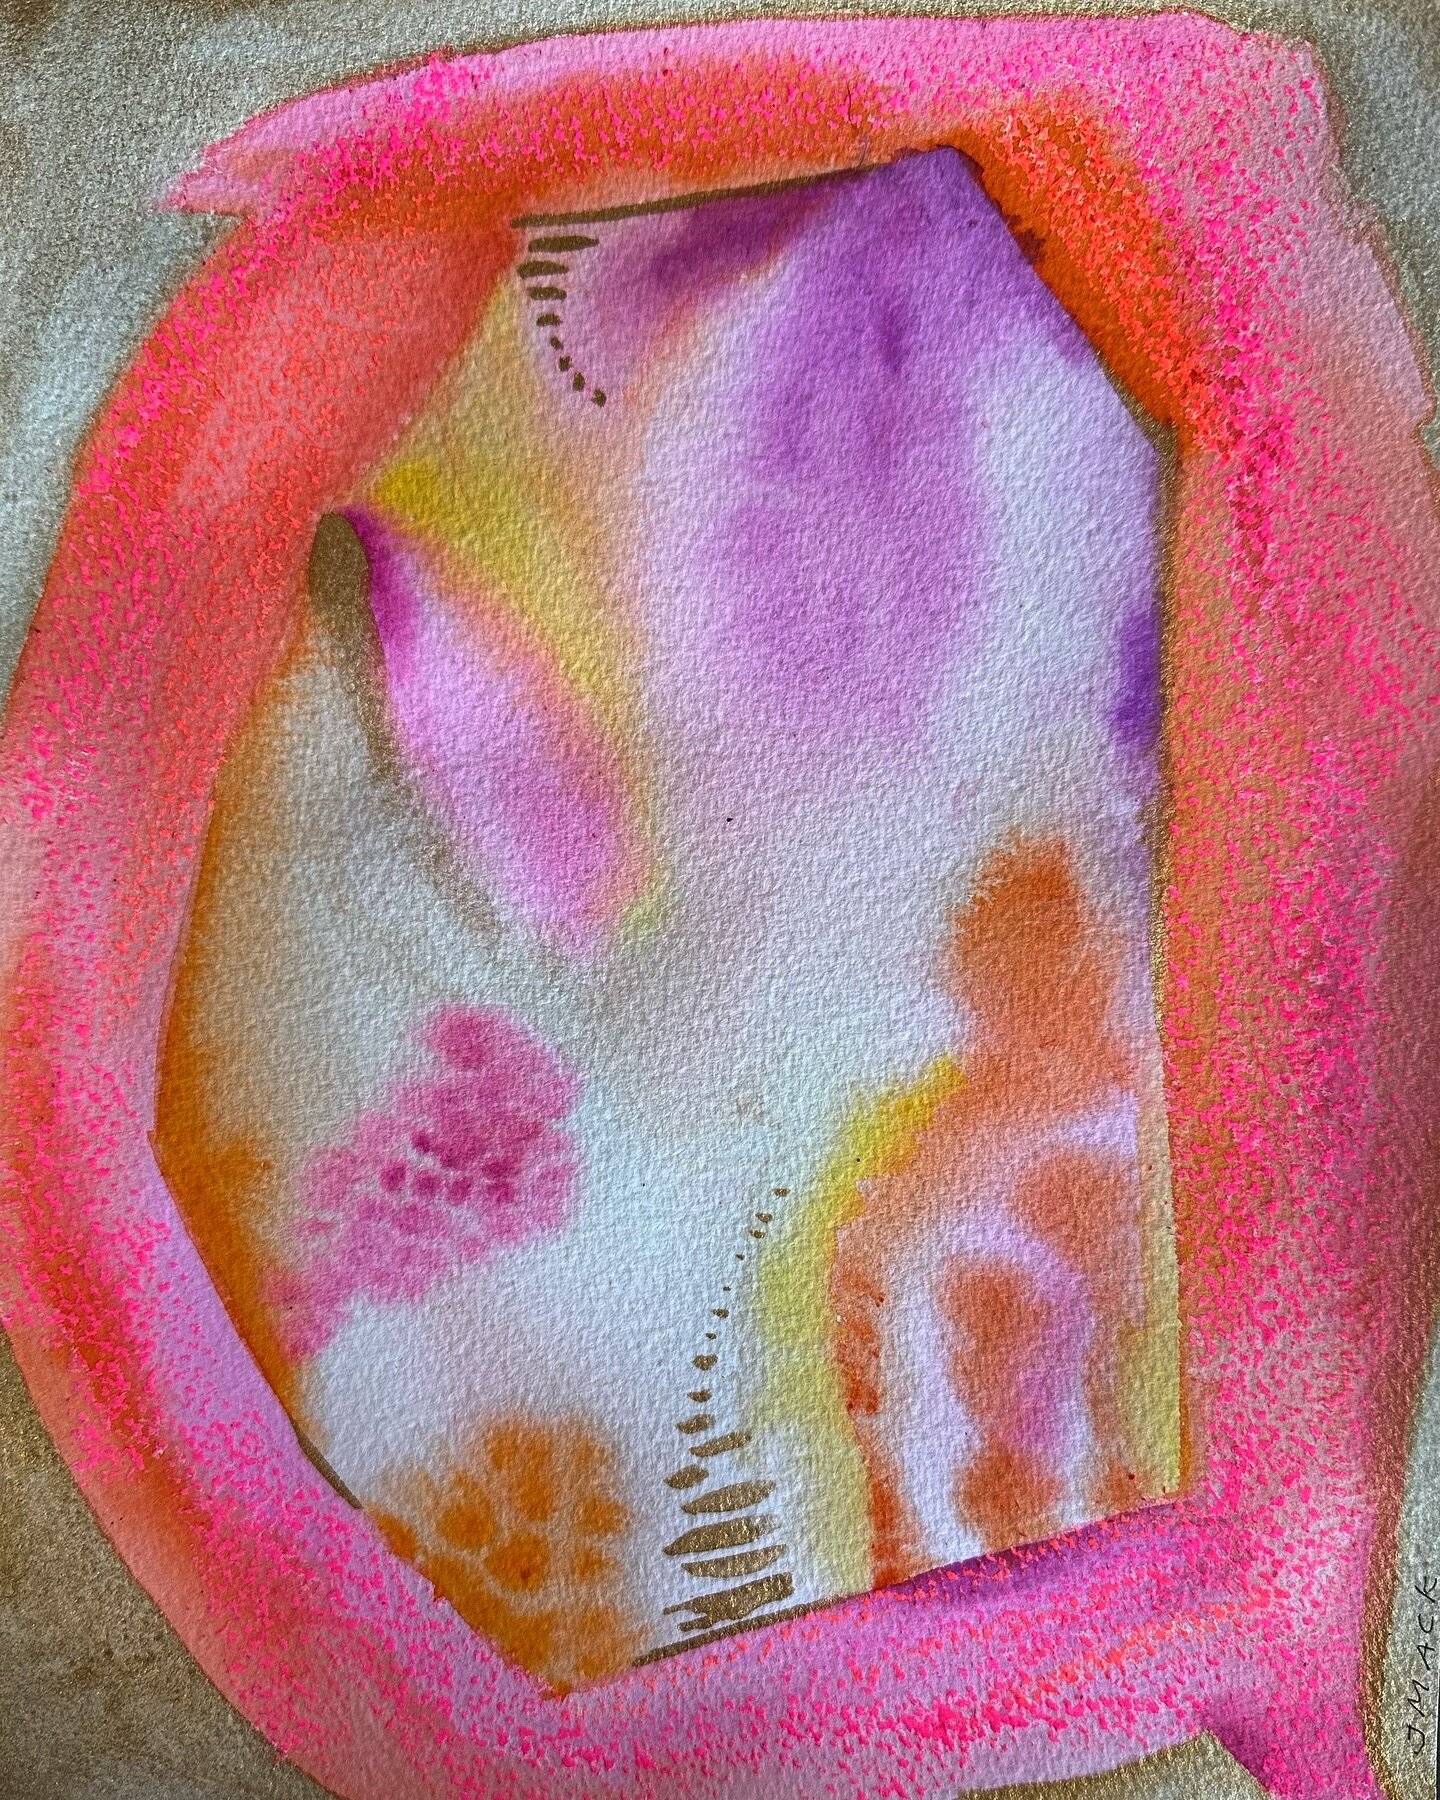 Desert placenta, 2023
Oil pastel + watercolor + sun 
&bull;
#postpartum #abstractart #placenta #afterbirth #healing